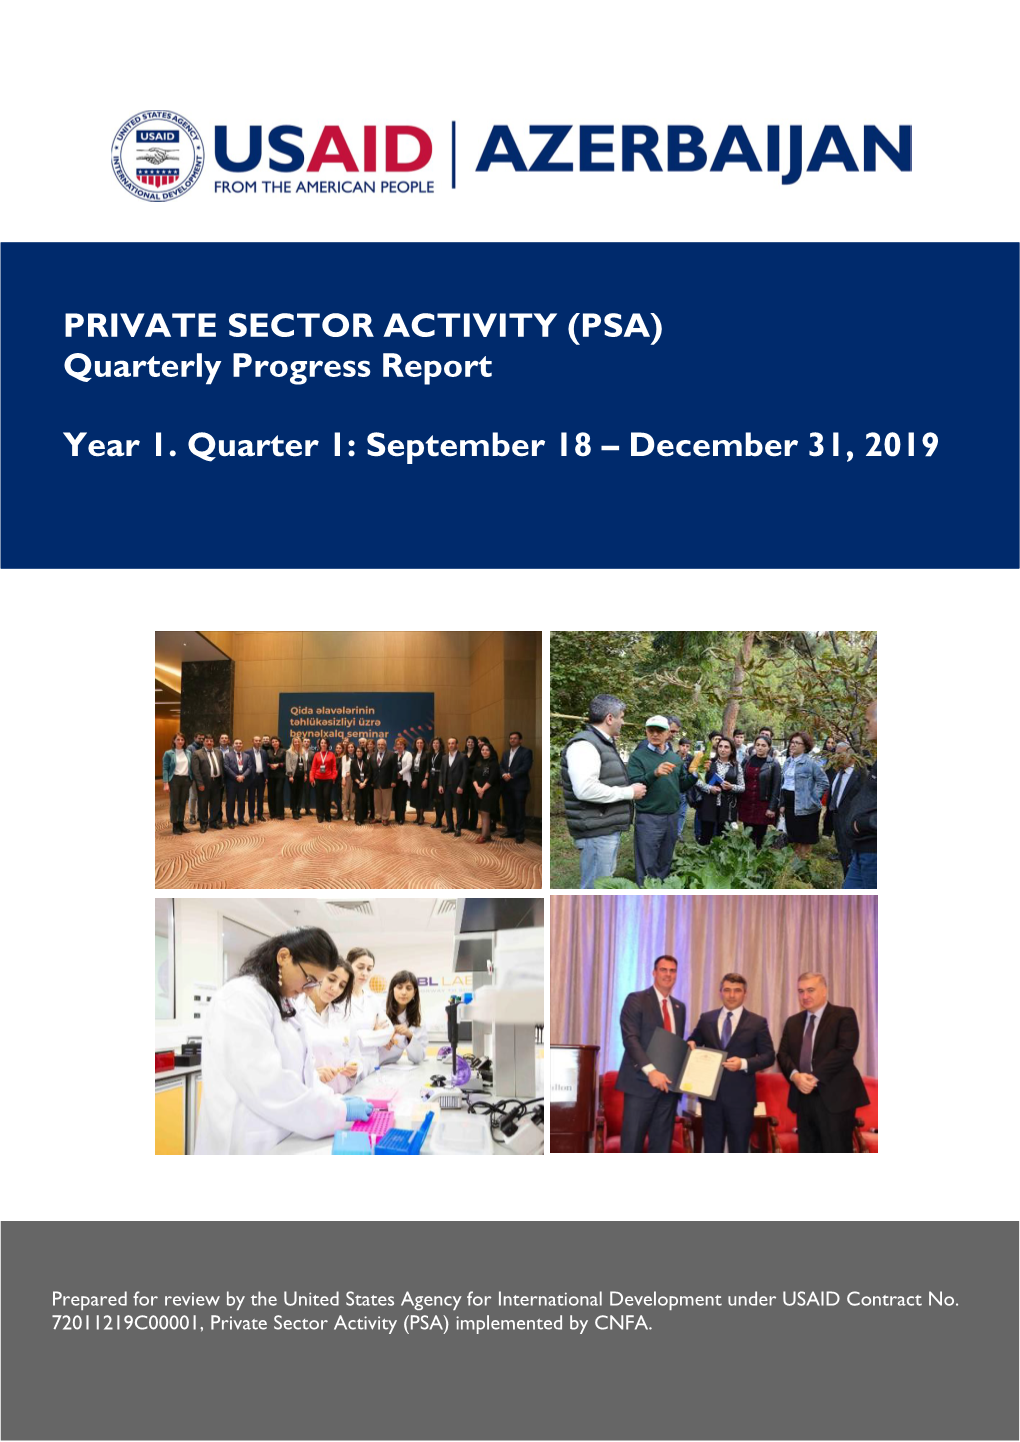 PRIVATE SECTOR ACTIVITY (PSA) Quarterly Progress Report